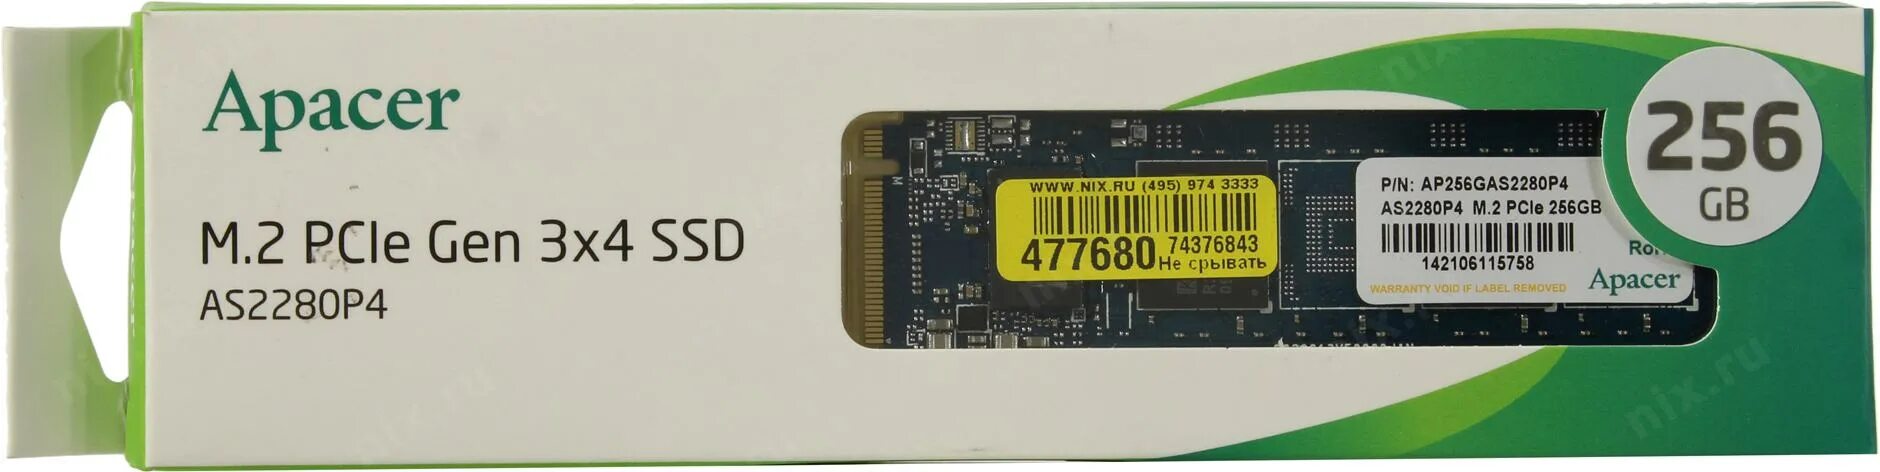 Ssd m 2 накопитель apacer as2280p4. 256 ГБ SSD M.2 накопитель Apacer as2280p4. 256 ГБ SSD M.2 накопитель Apacer as2280p4 [ap256gas2280p4-1]. Apacer m.2 as2280p4 512. Твердотельный накопитель Apacer m1 4gb.